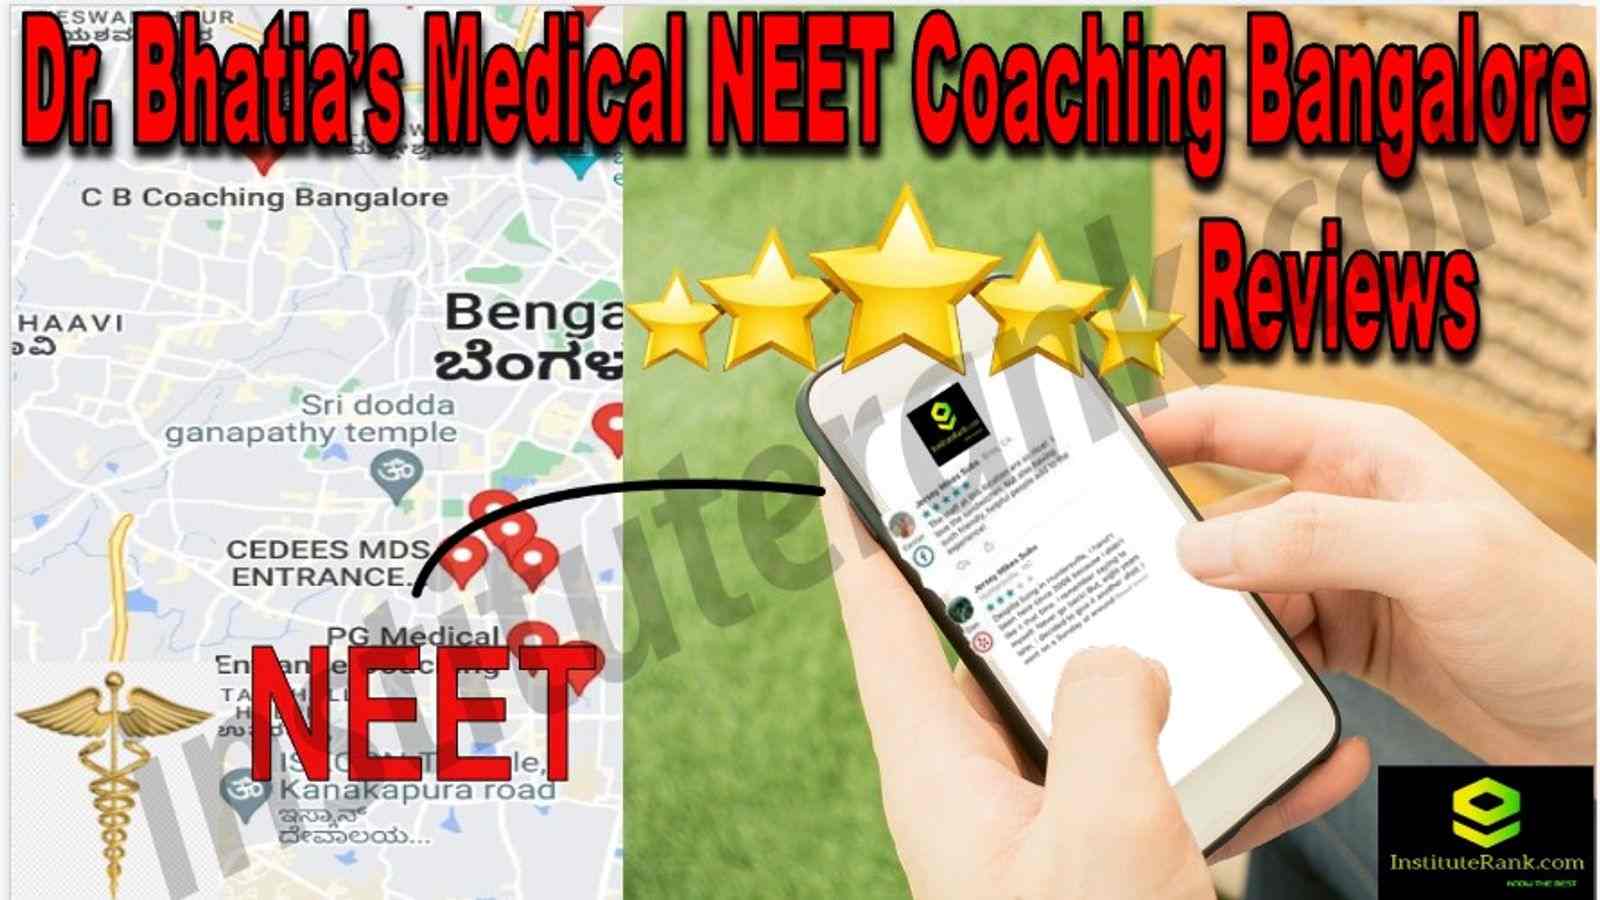 Dr. Bhatia’s Medical NEET Coaching Bangalore Reviews